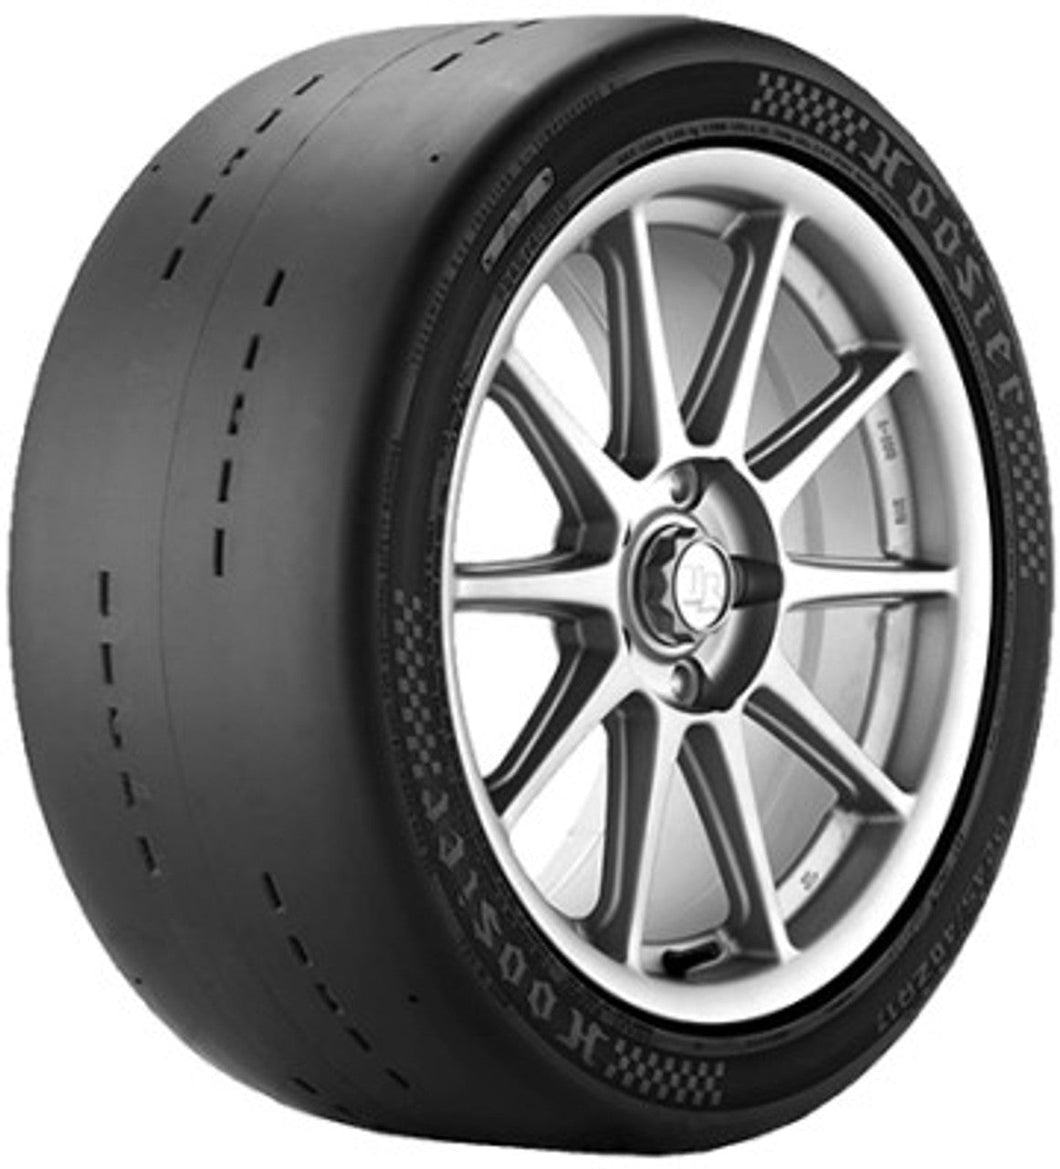 255/35 ZR18 Hoosier Tire Slick D.O.T Neumático